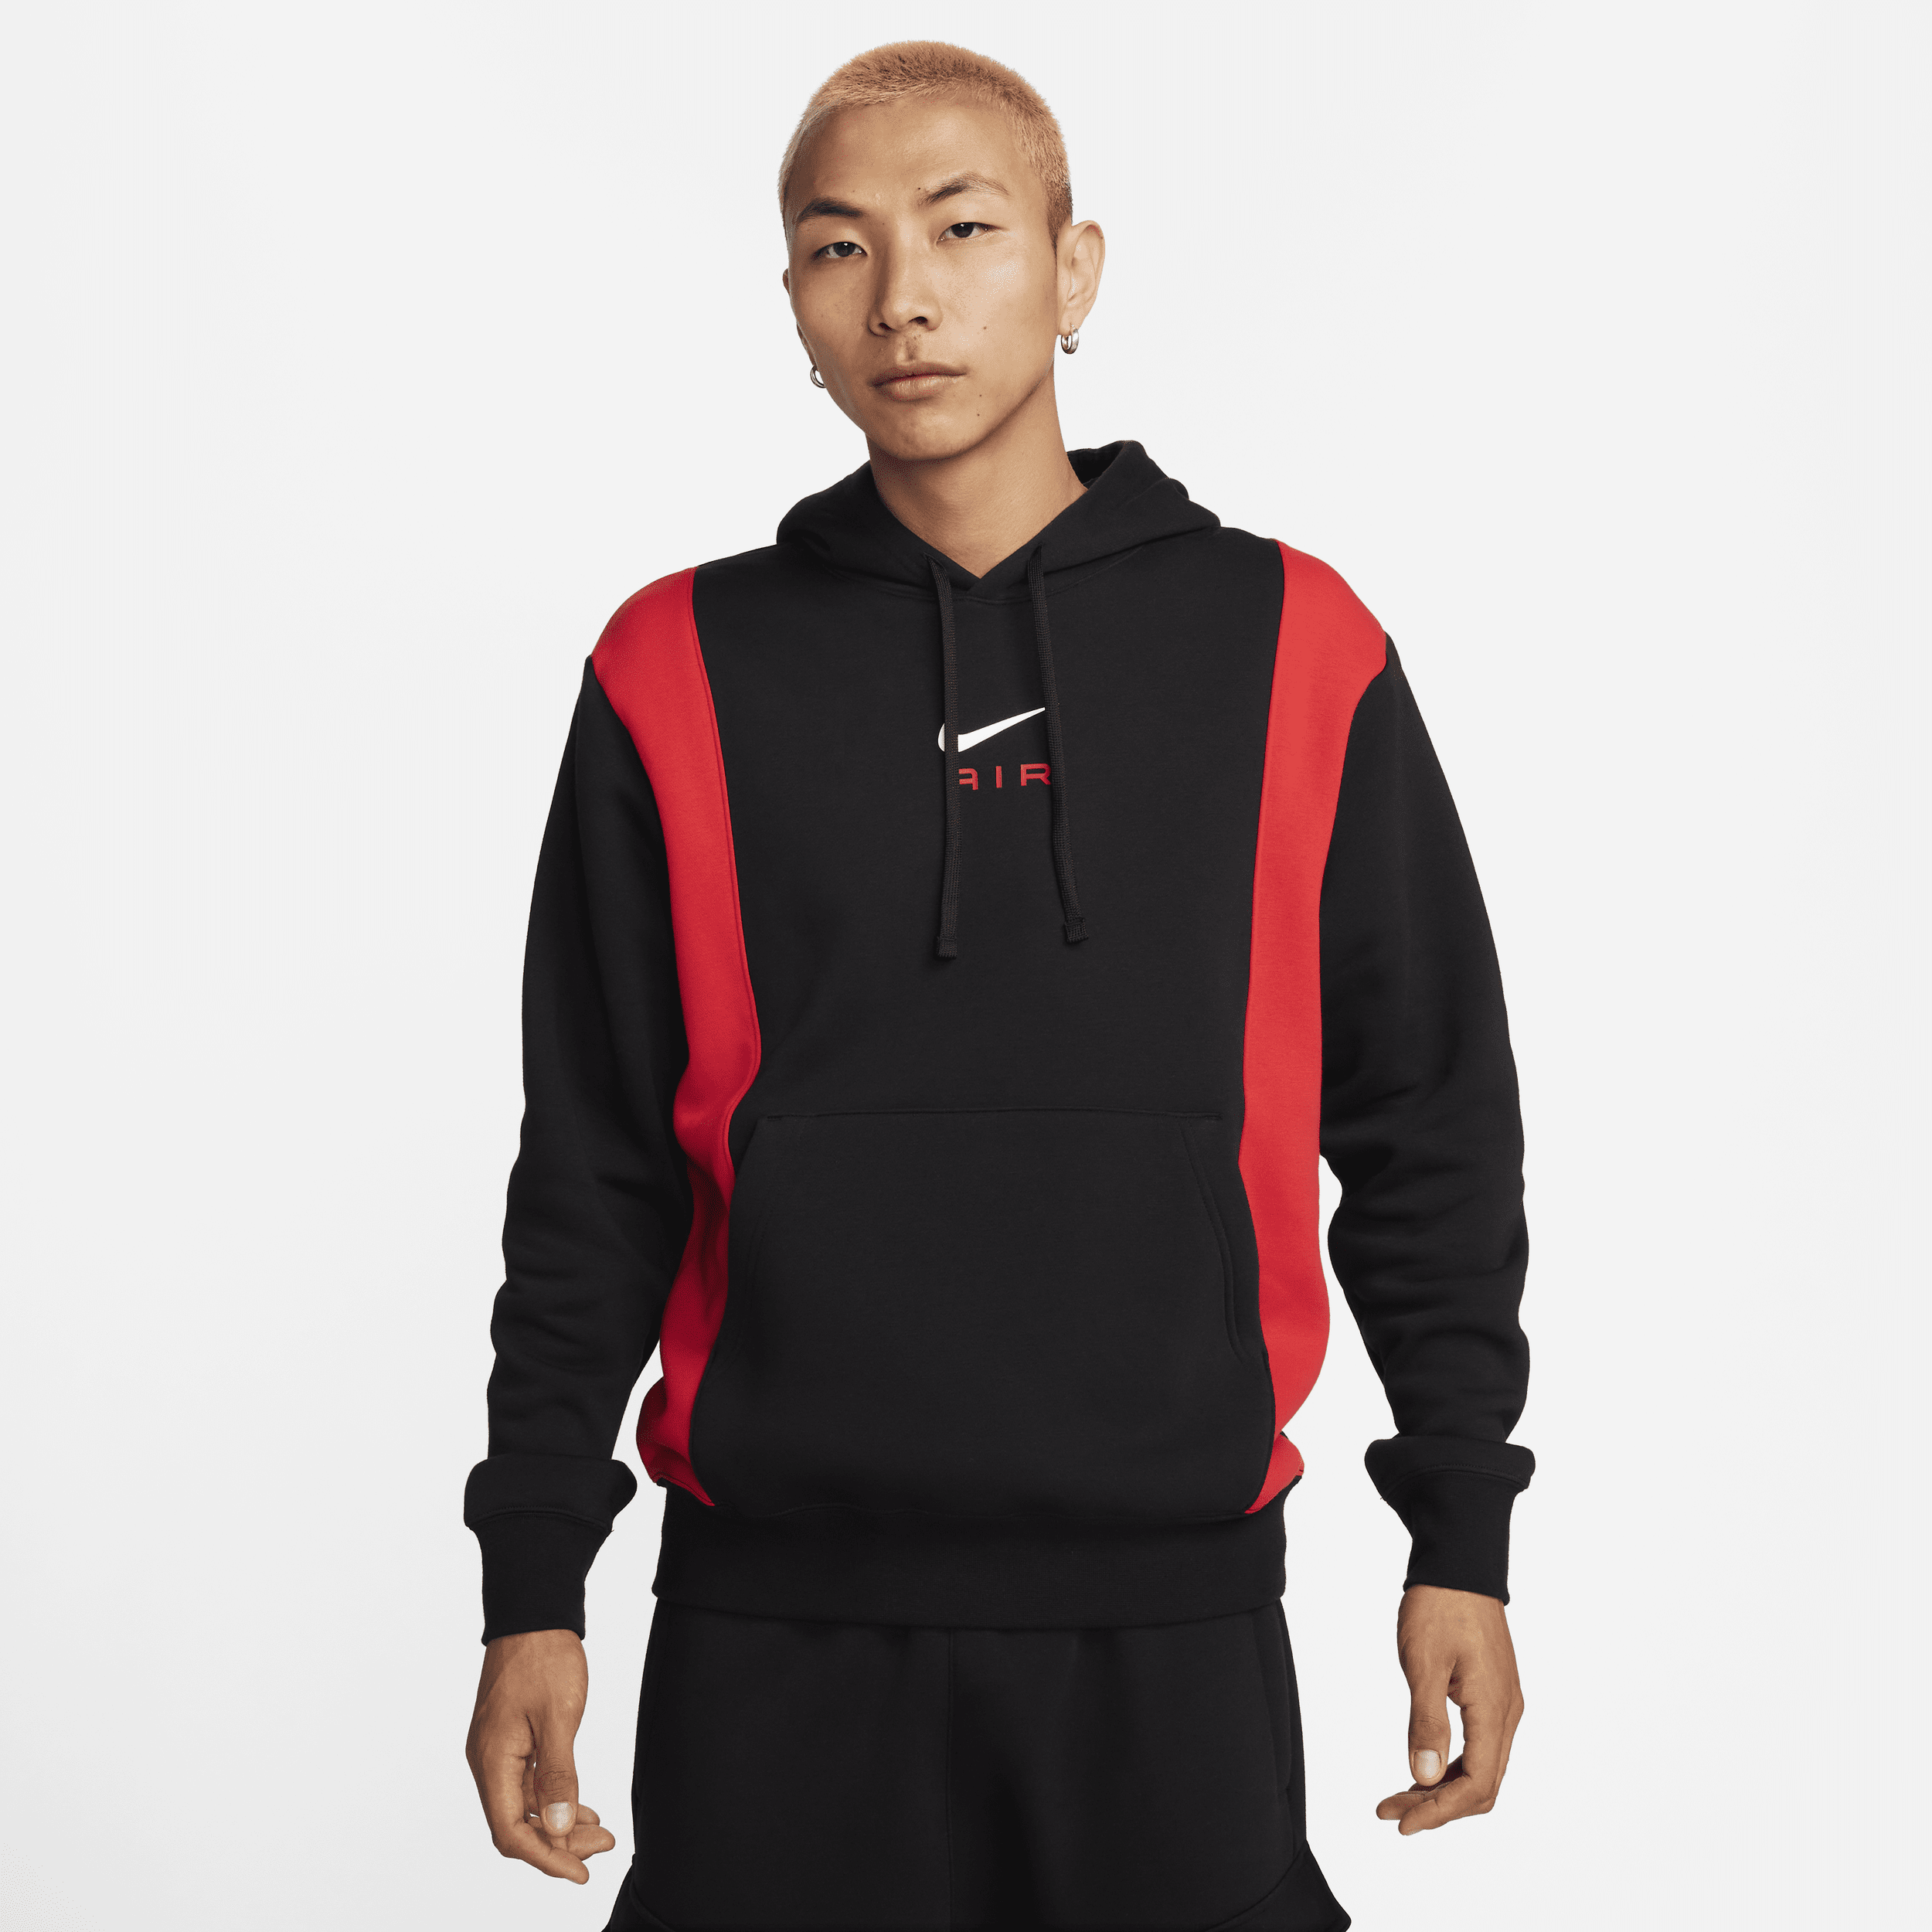 Felpa pullover in fleece con cappuccio Nike Air – Uomo - Nero